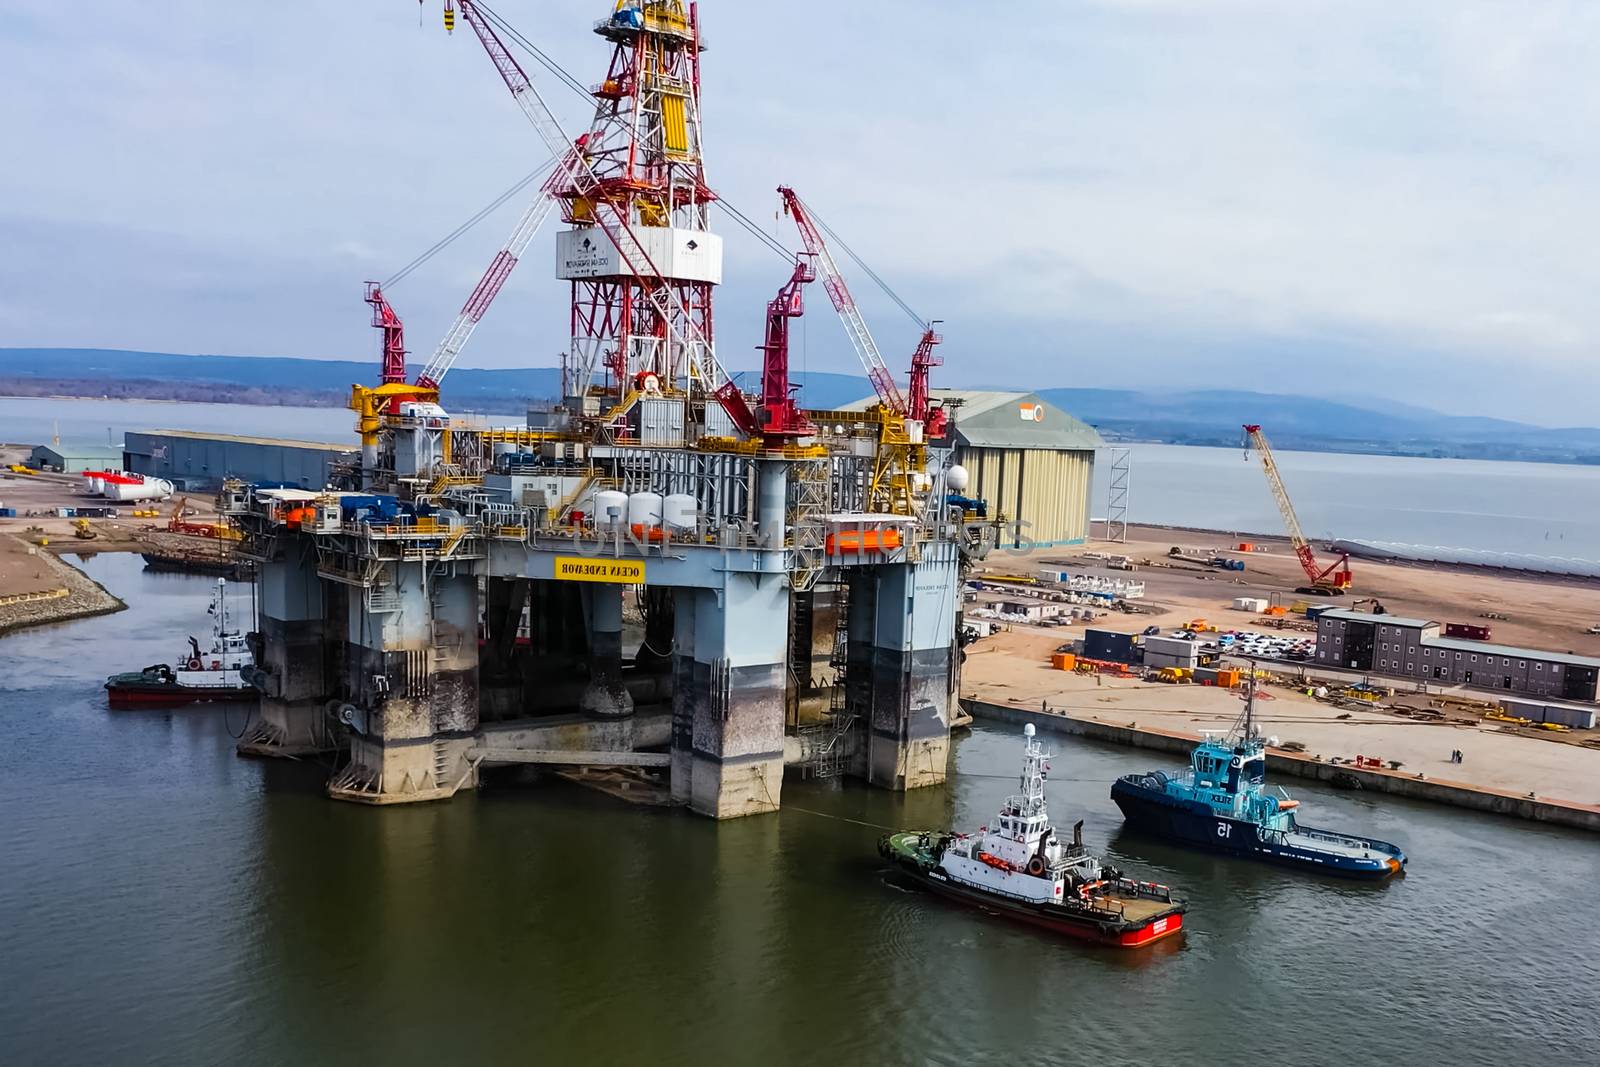 UKC, North Sea - December 18, 2019: Drilling platform in the port. Towing of the oil platform.